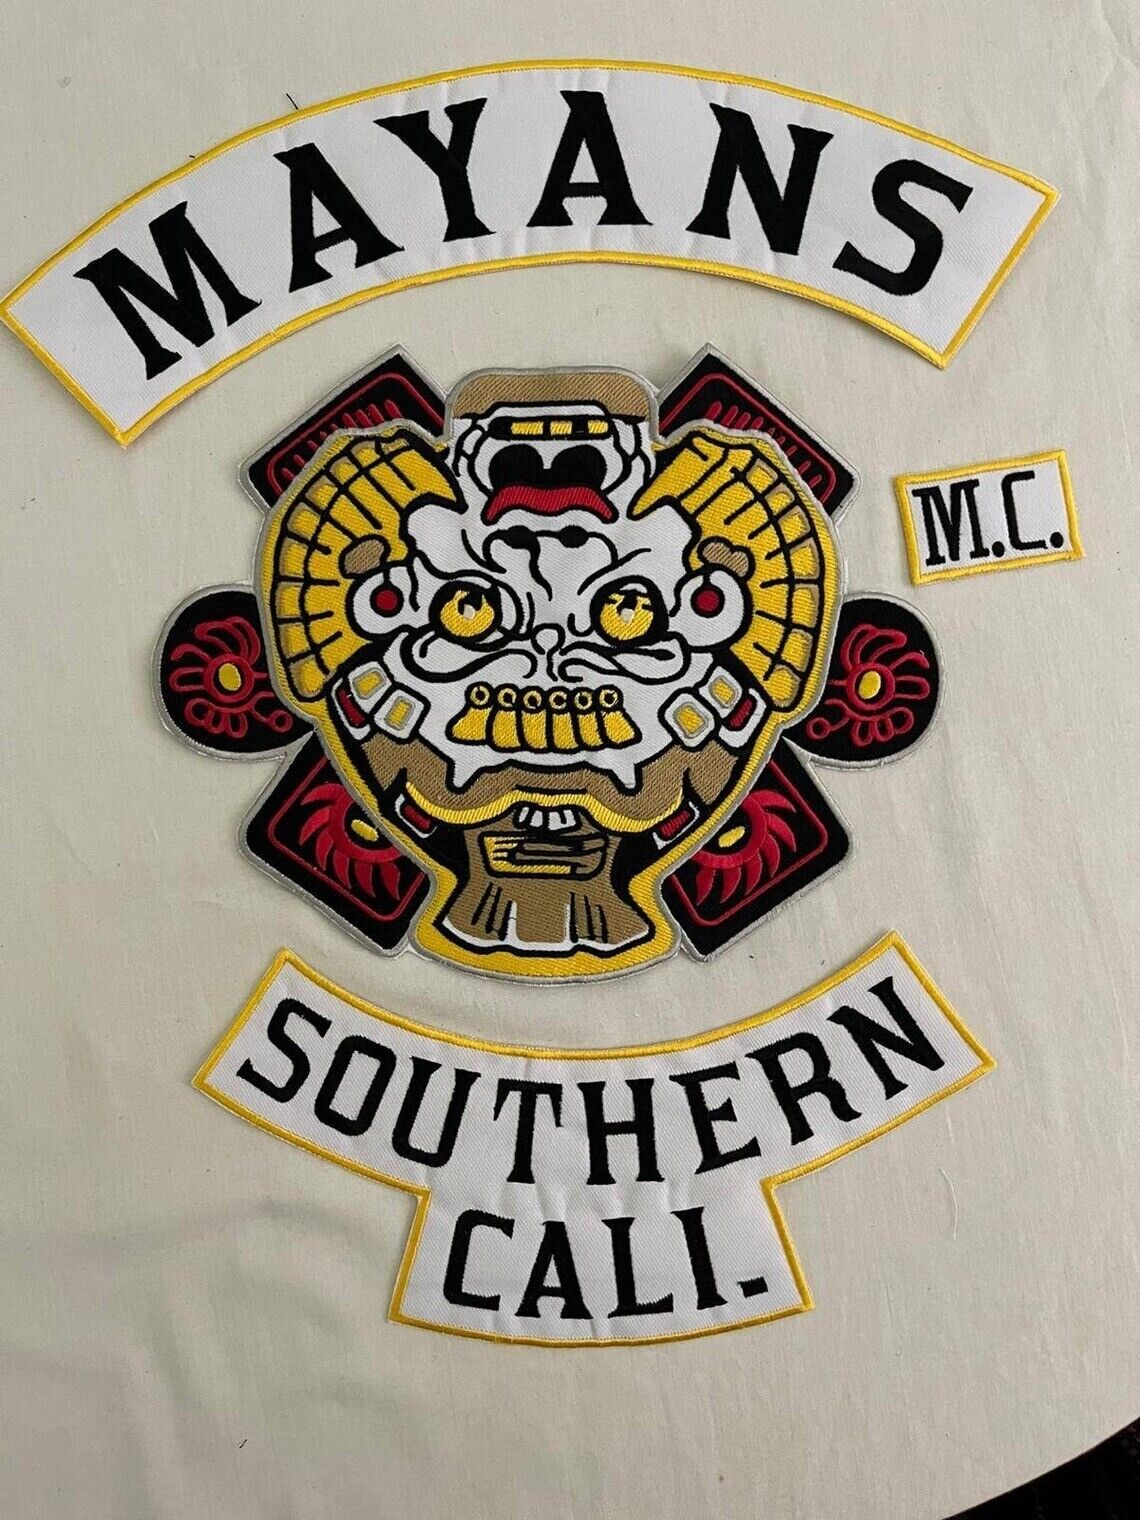 Mayans southern cali mc 35 cm iron on embroidered set Size Large